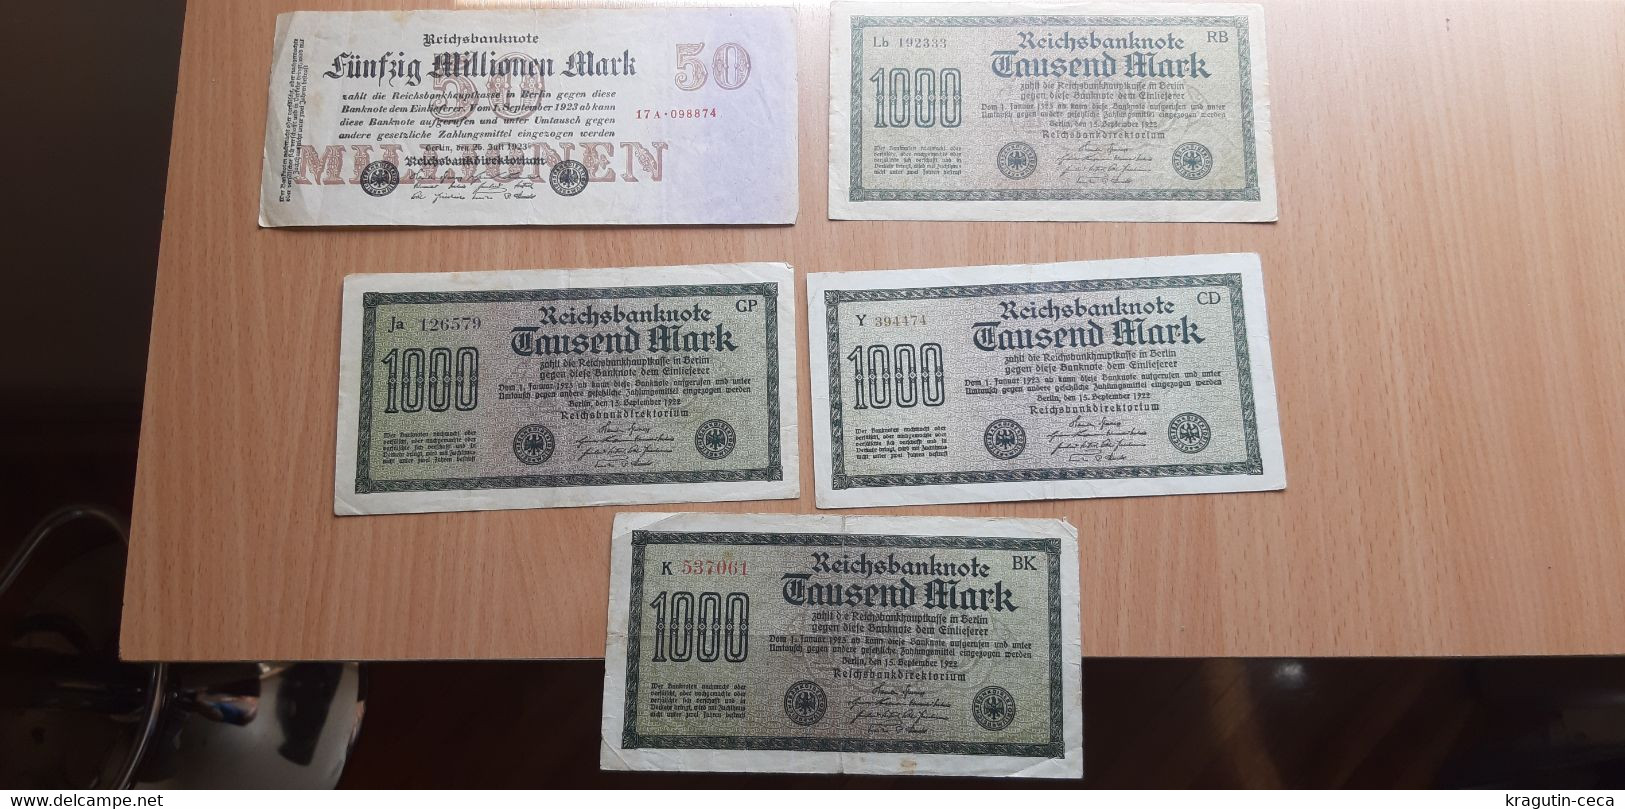 REICHSBANKNOTE 1922 LOT GERMAN GERMANY BANKNOTE BANK MILLIONEN TAUSEND MARK BILL Paper Money BILLET DE BANQUE - Collections